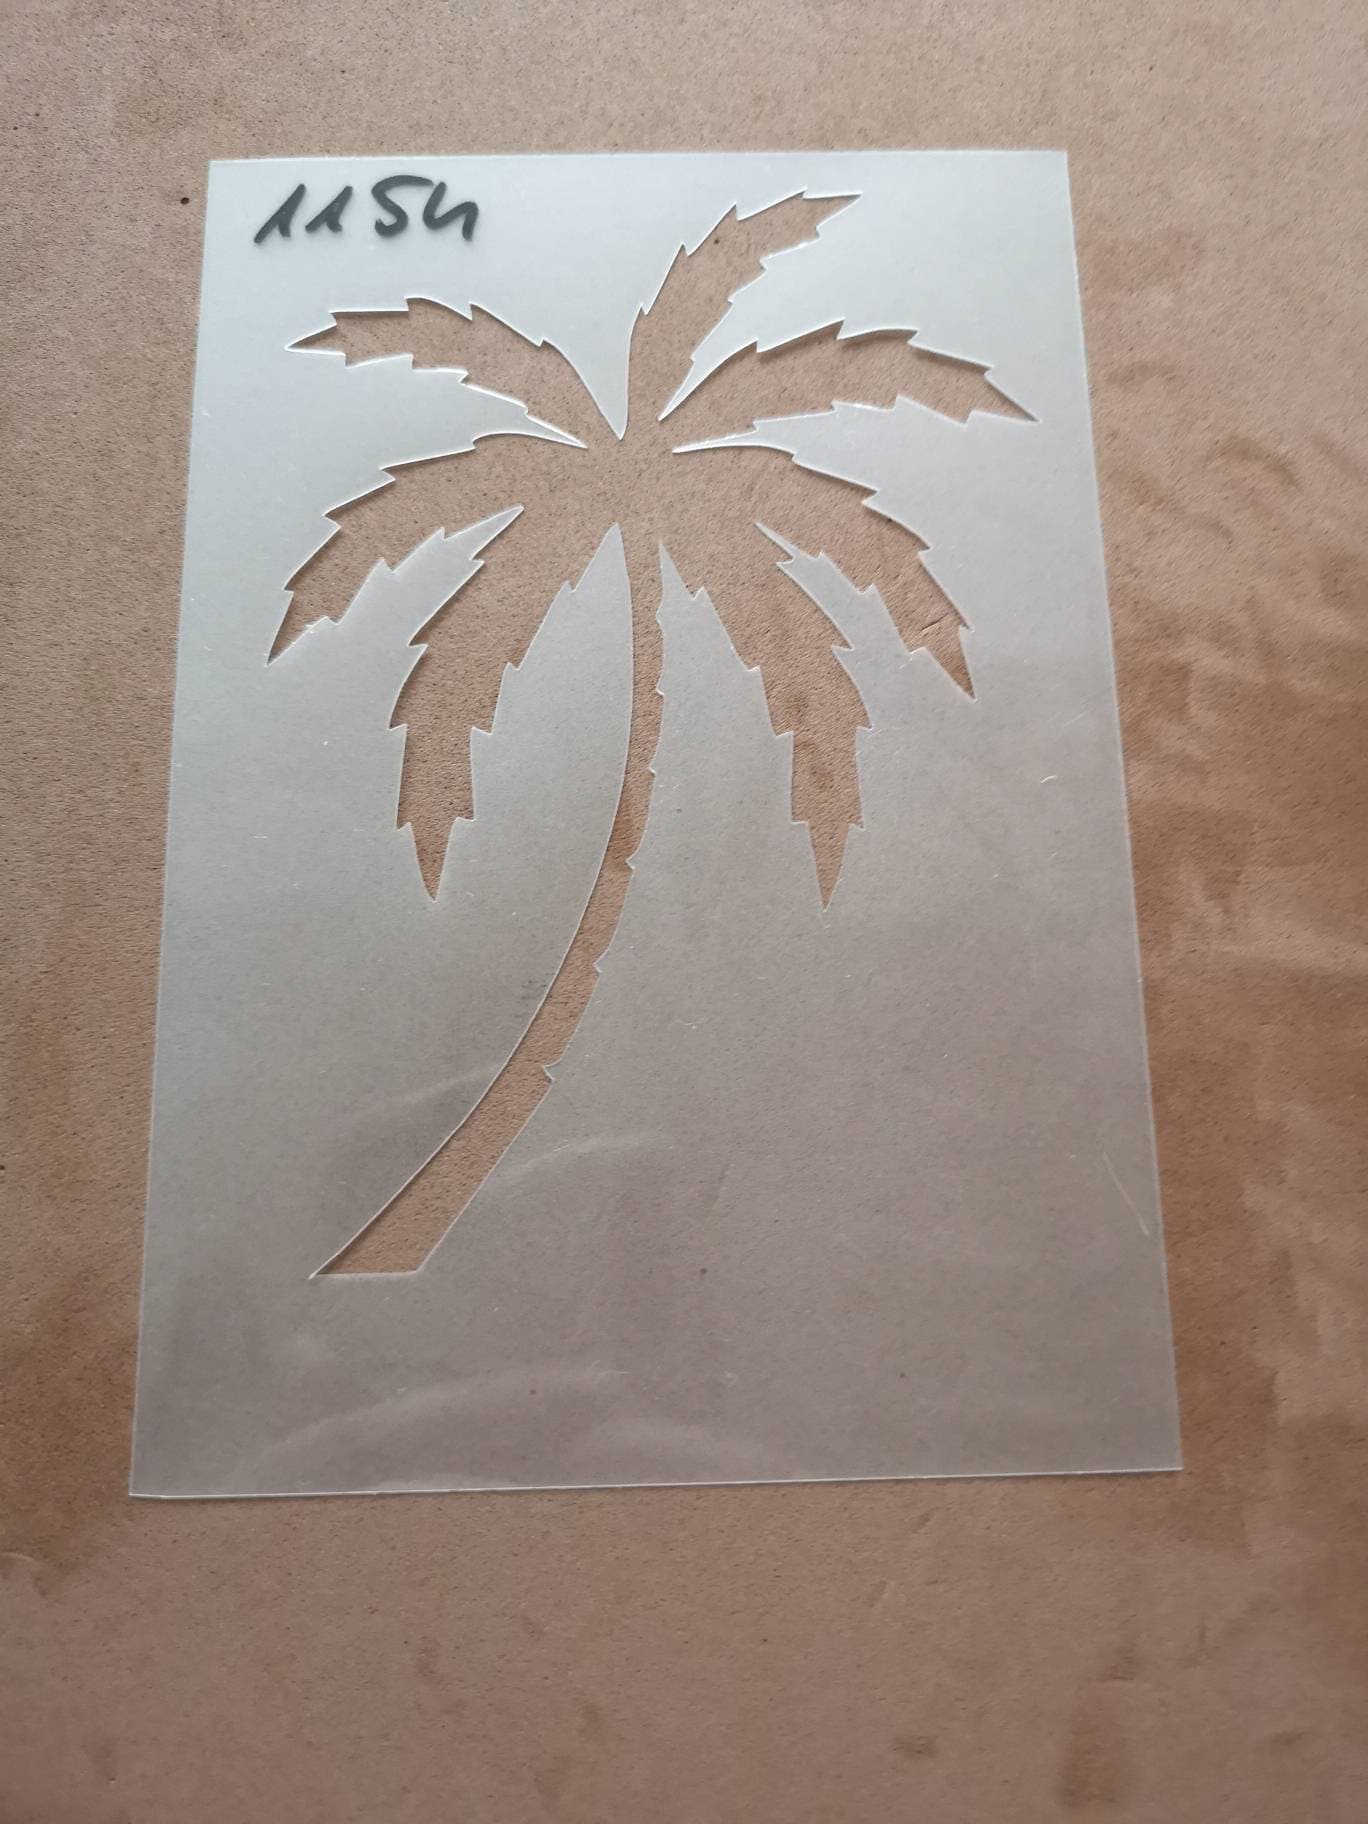 Tropical Stencil, Palm Stencil Leaves, Stencil Design, Tropical Leaves  Stencil, Wall Stencil, Reusable Stencil, DIY, Palm Leaf Stencil